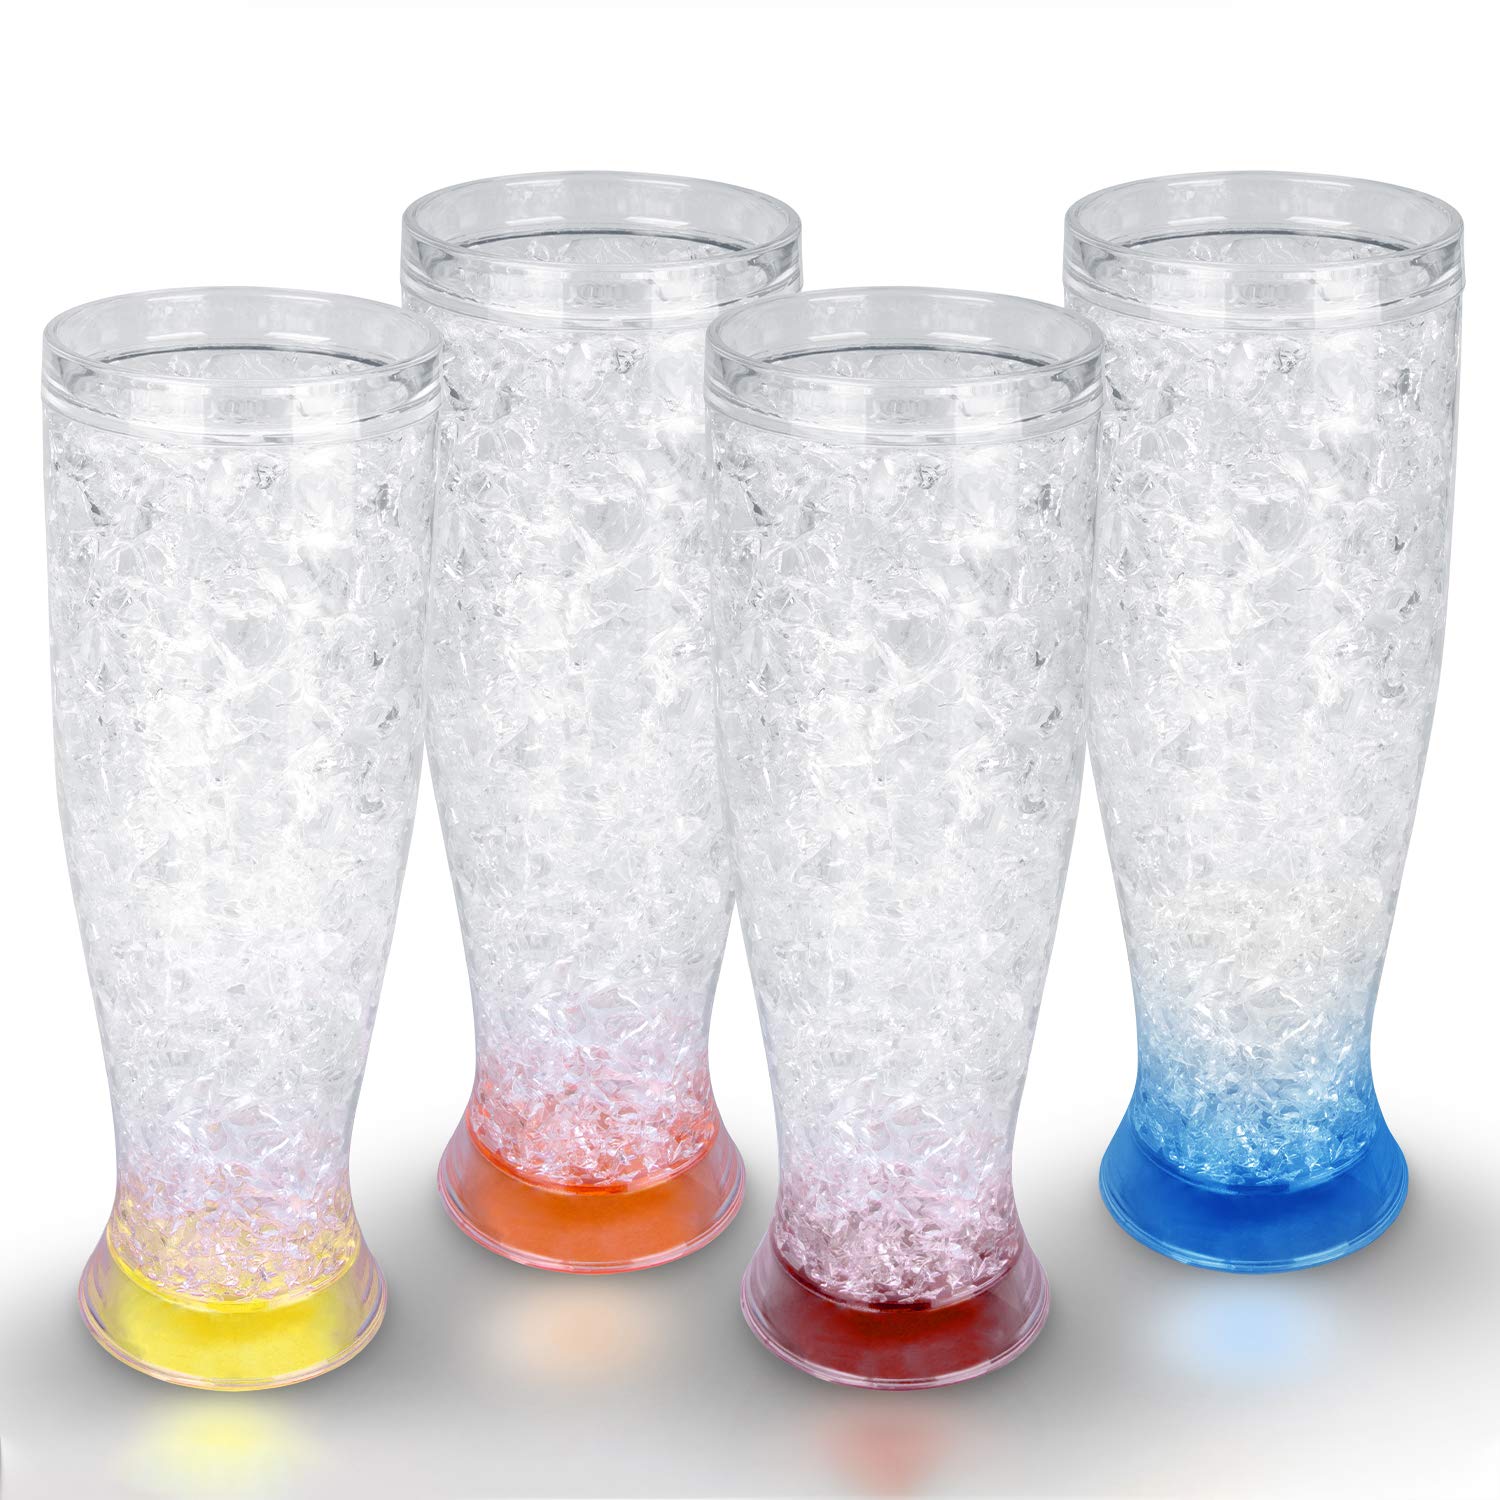 Patiomos Freezer Ice Beer Mugs, Drinking glasses, Double Wall gel